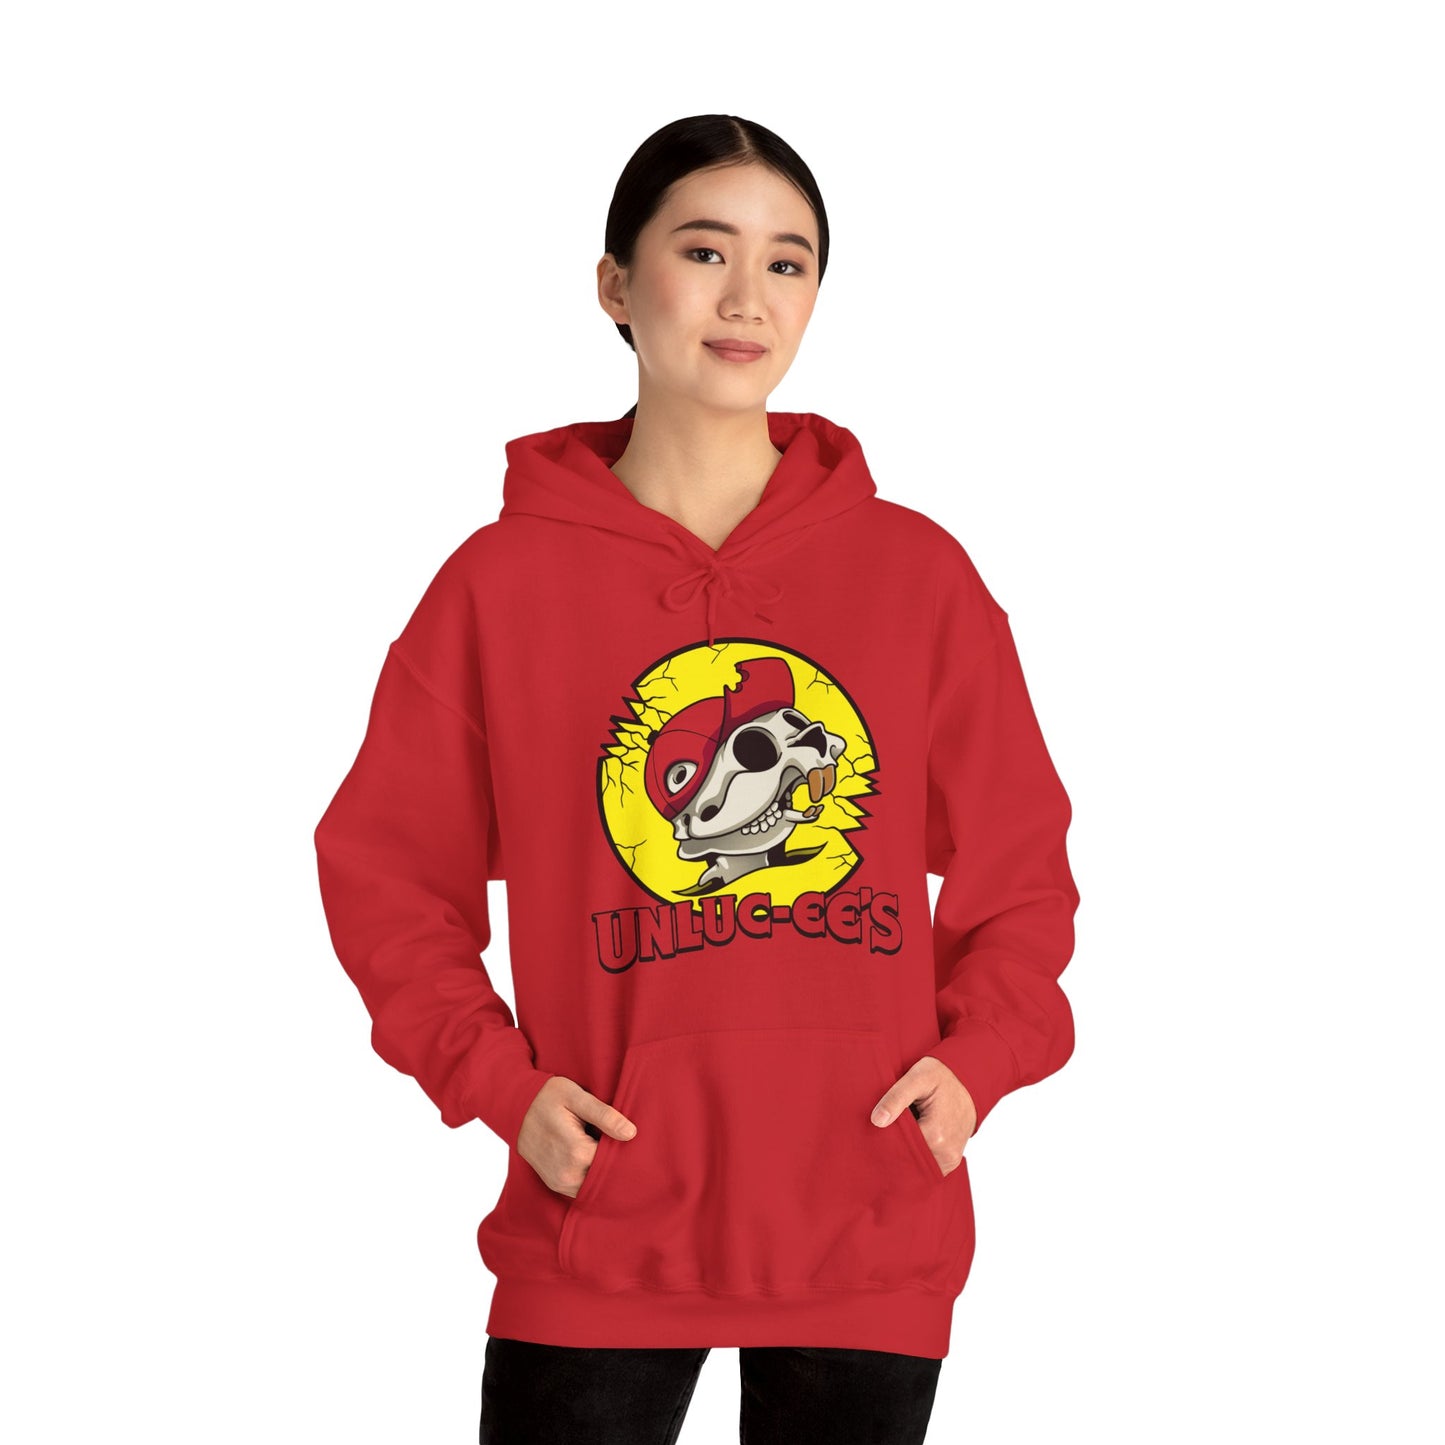 UNLUC-EES pullover hoodie